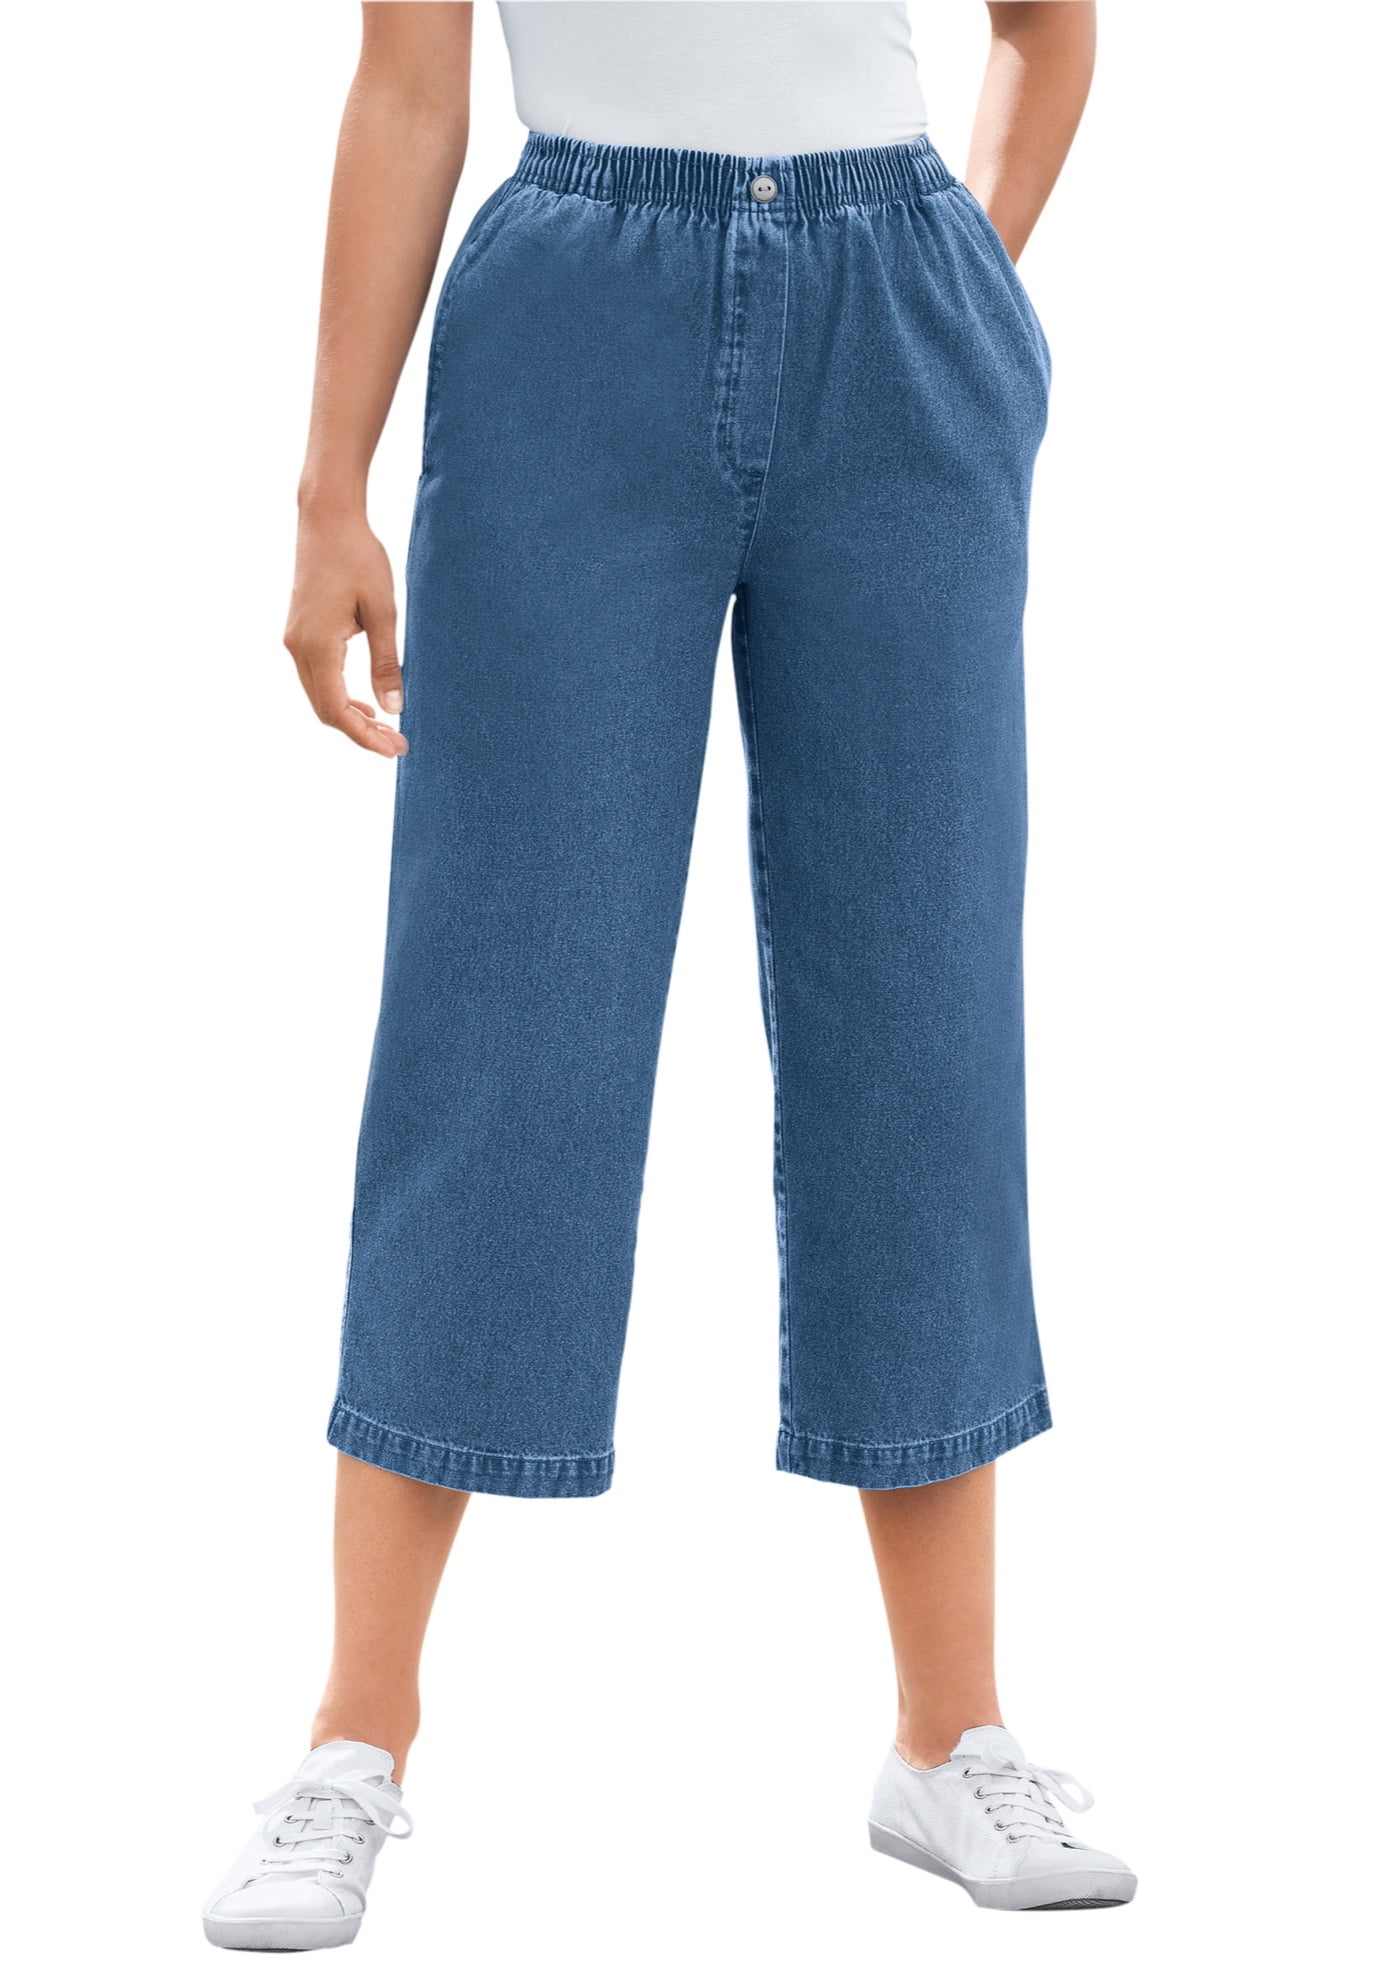 Woman Within Women's Plus Size Petite 7-Day Denim Capri Pants - Walmart.com